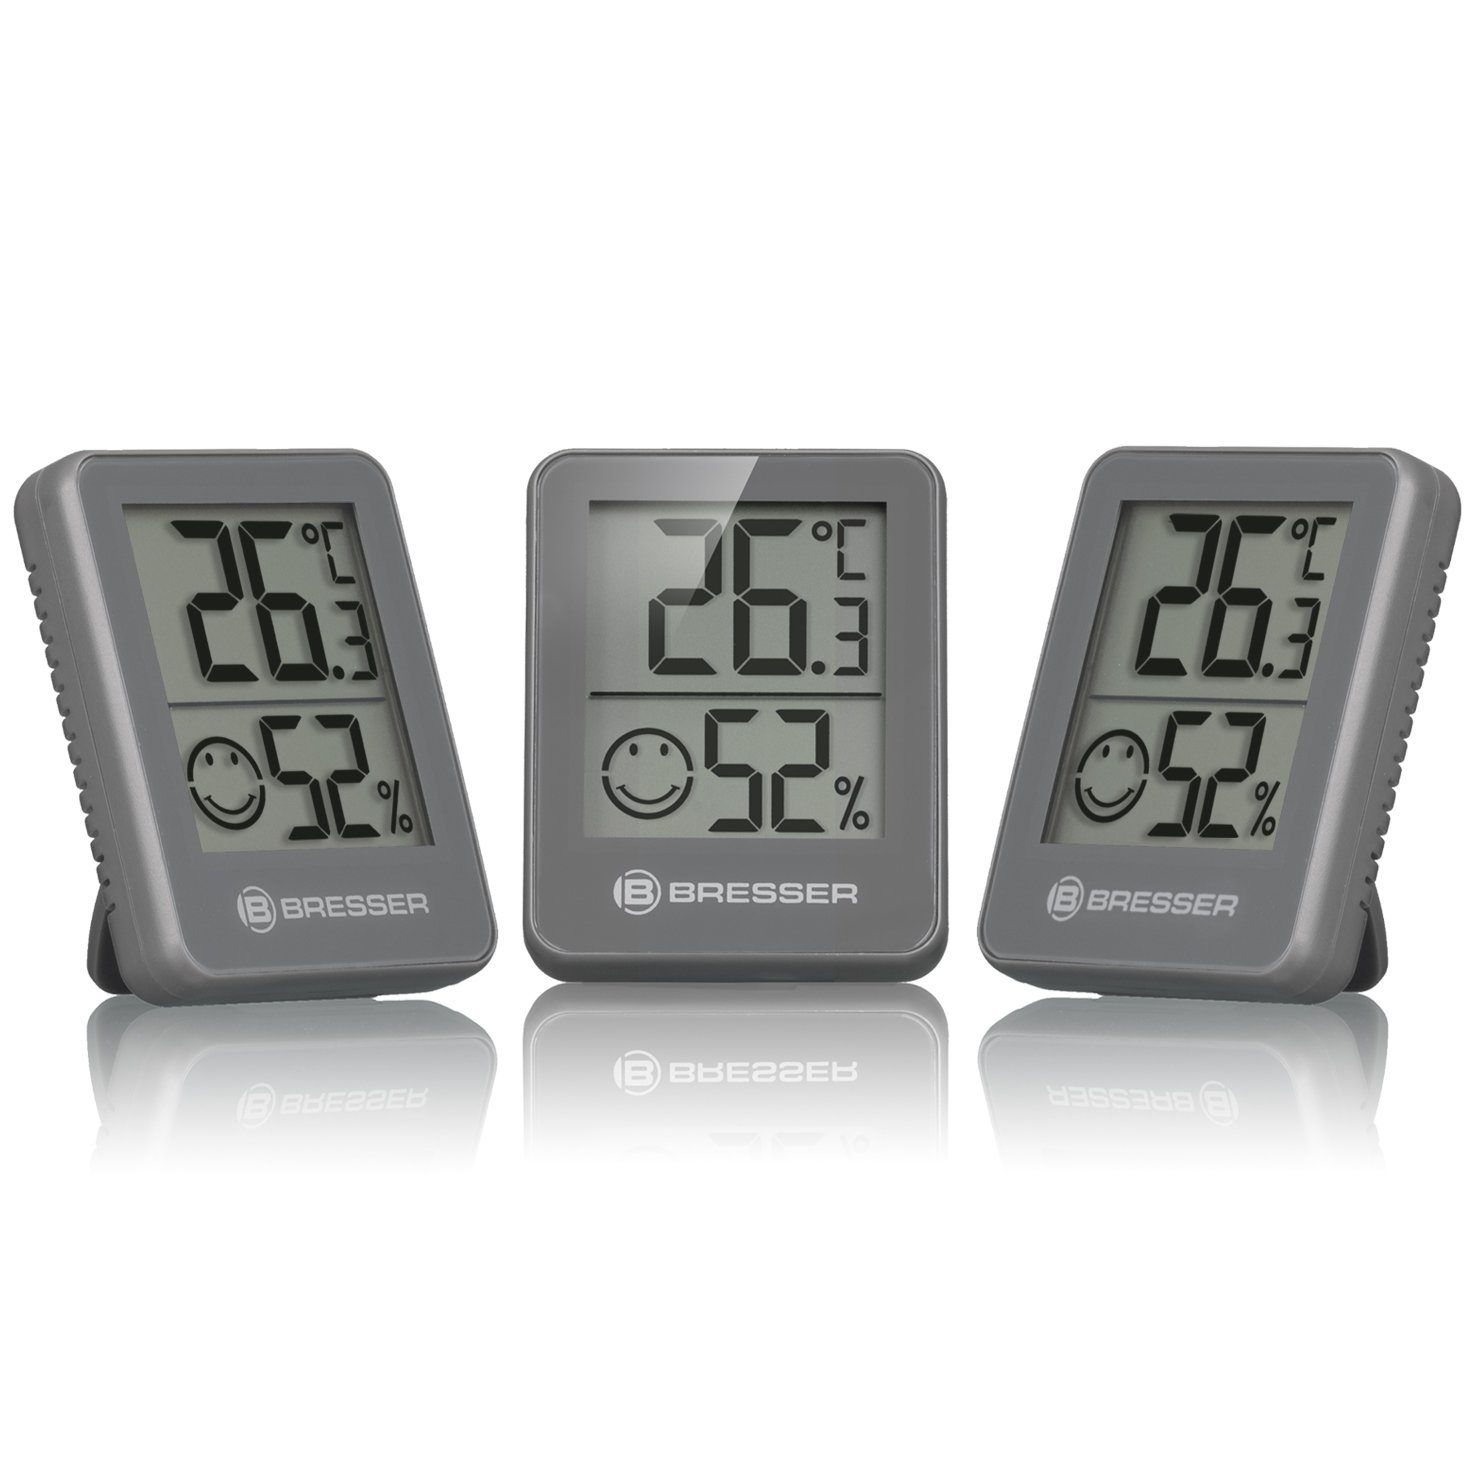 BRESSER Hygrometer Temeo Hygro Indikator 3er Set Thermometer / Temperaturmessgerät grau